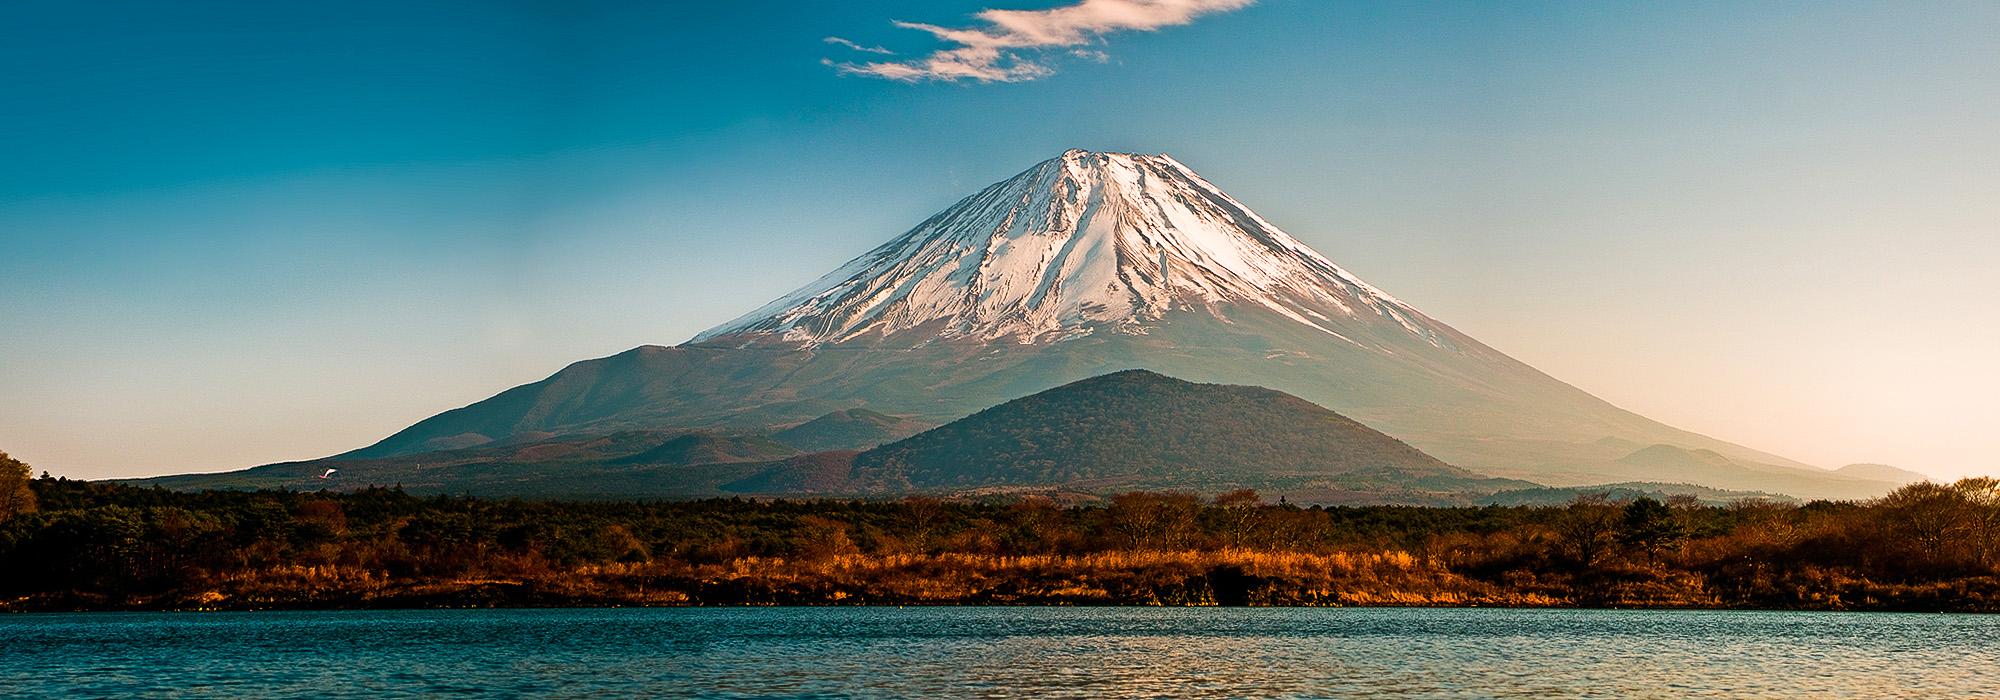 japan: the natural world and landscapes — Google Arts & Culture